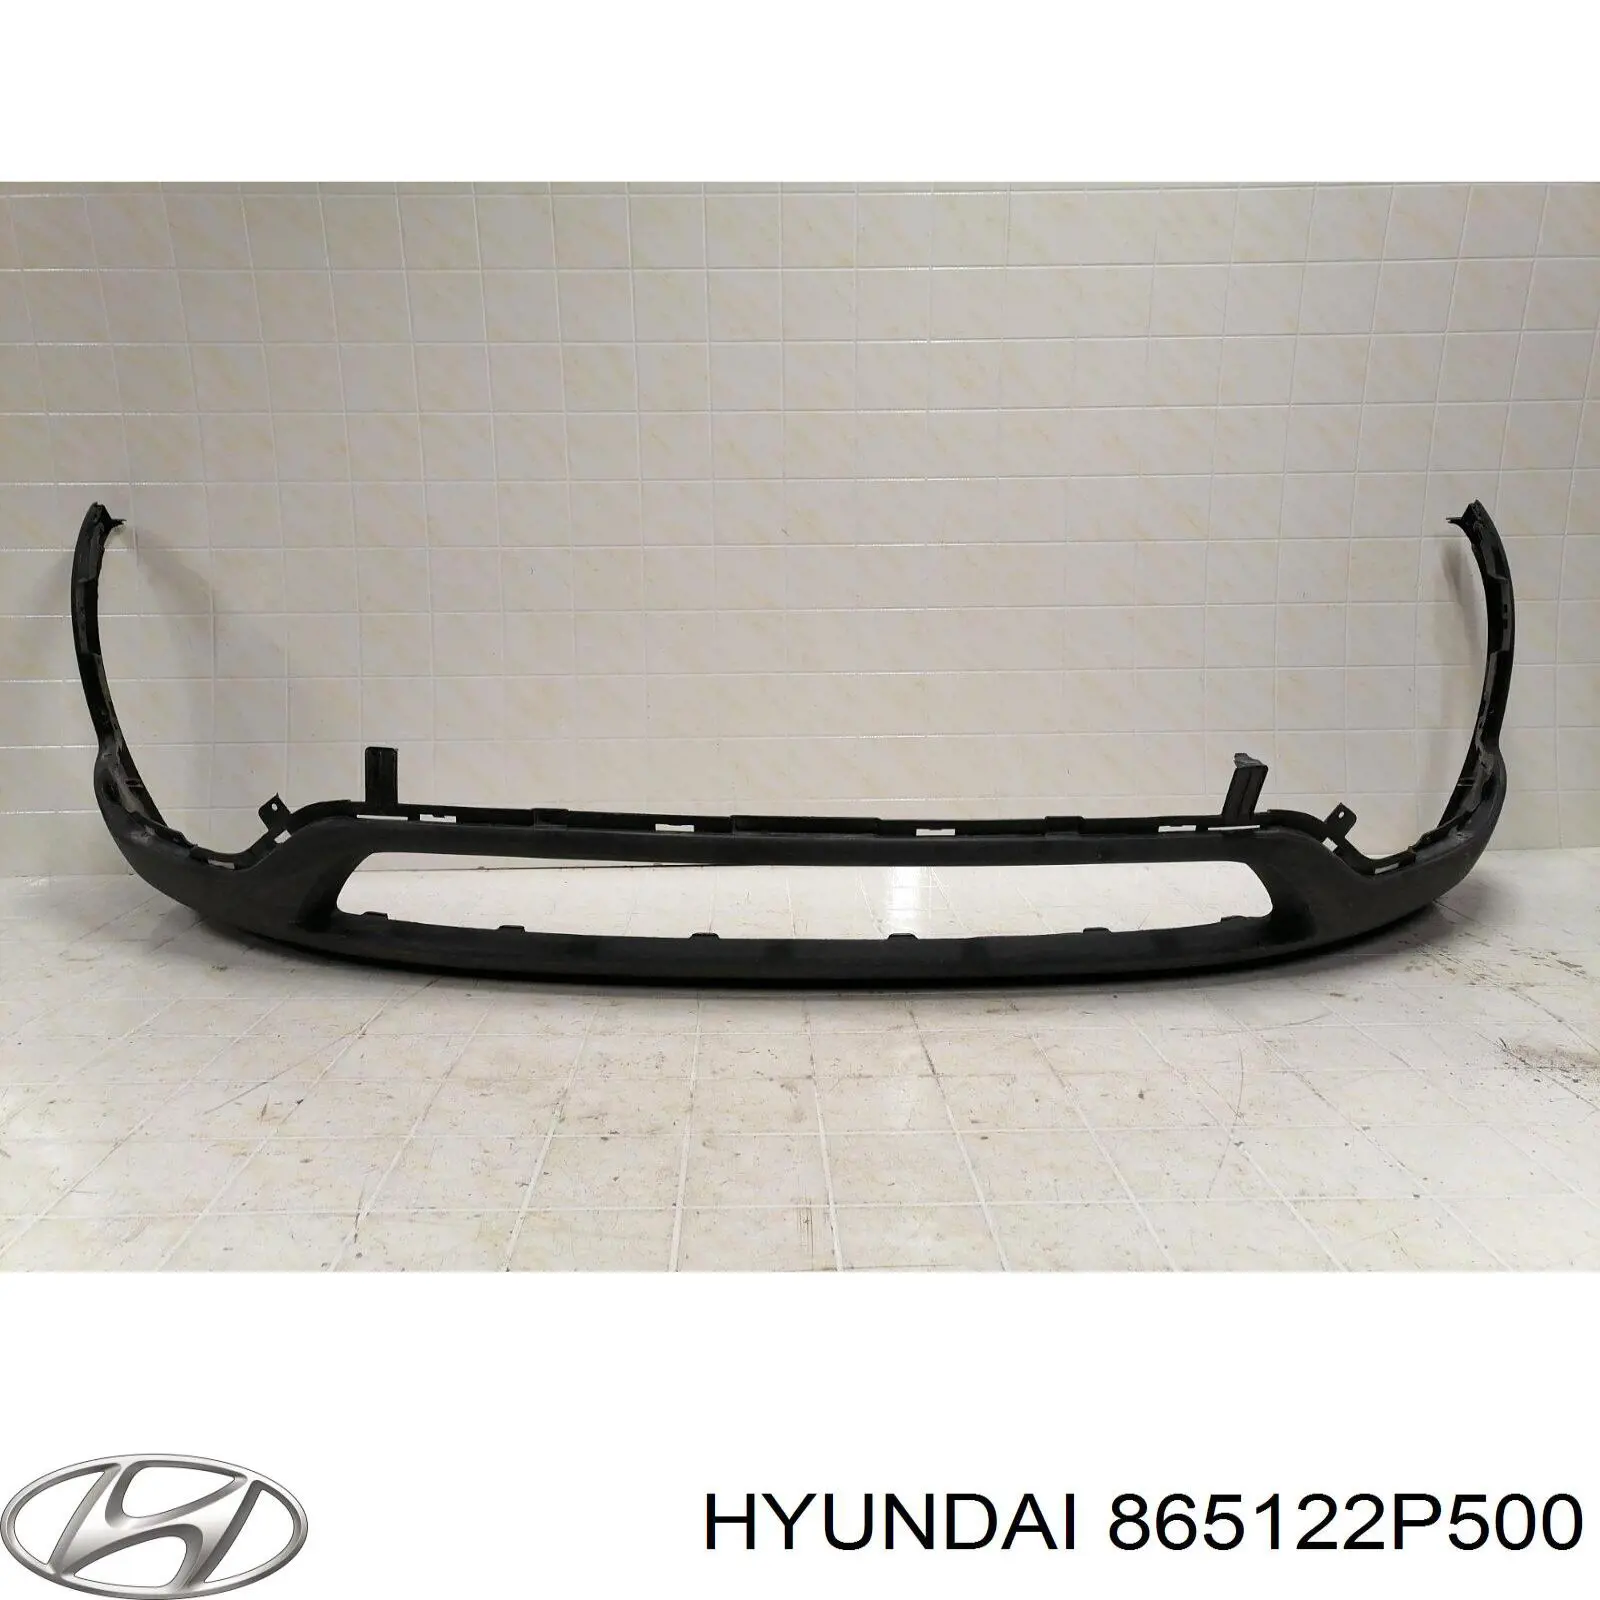 865122P500 Hyundai/Kia parachoques delantero, parte inferior